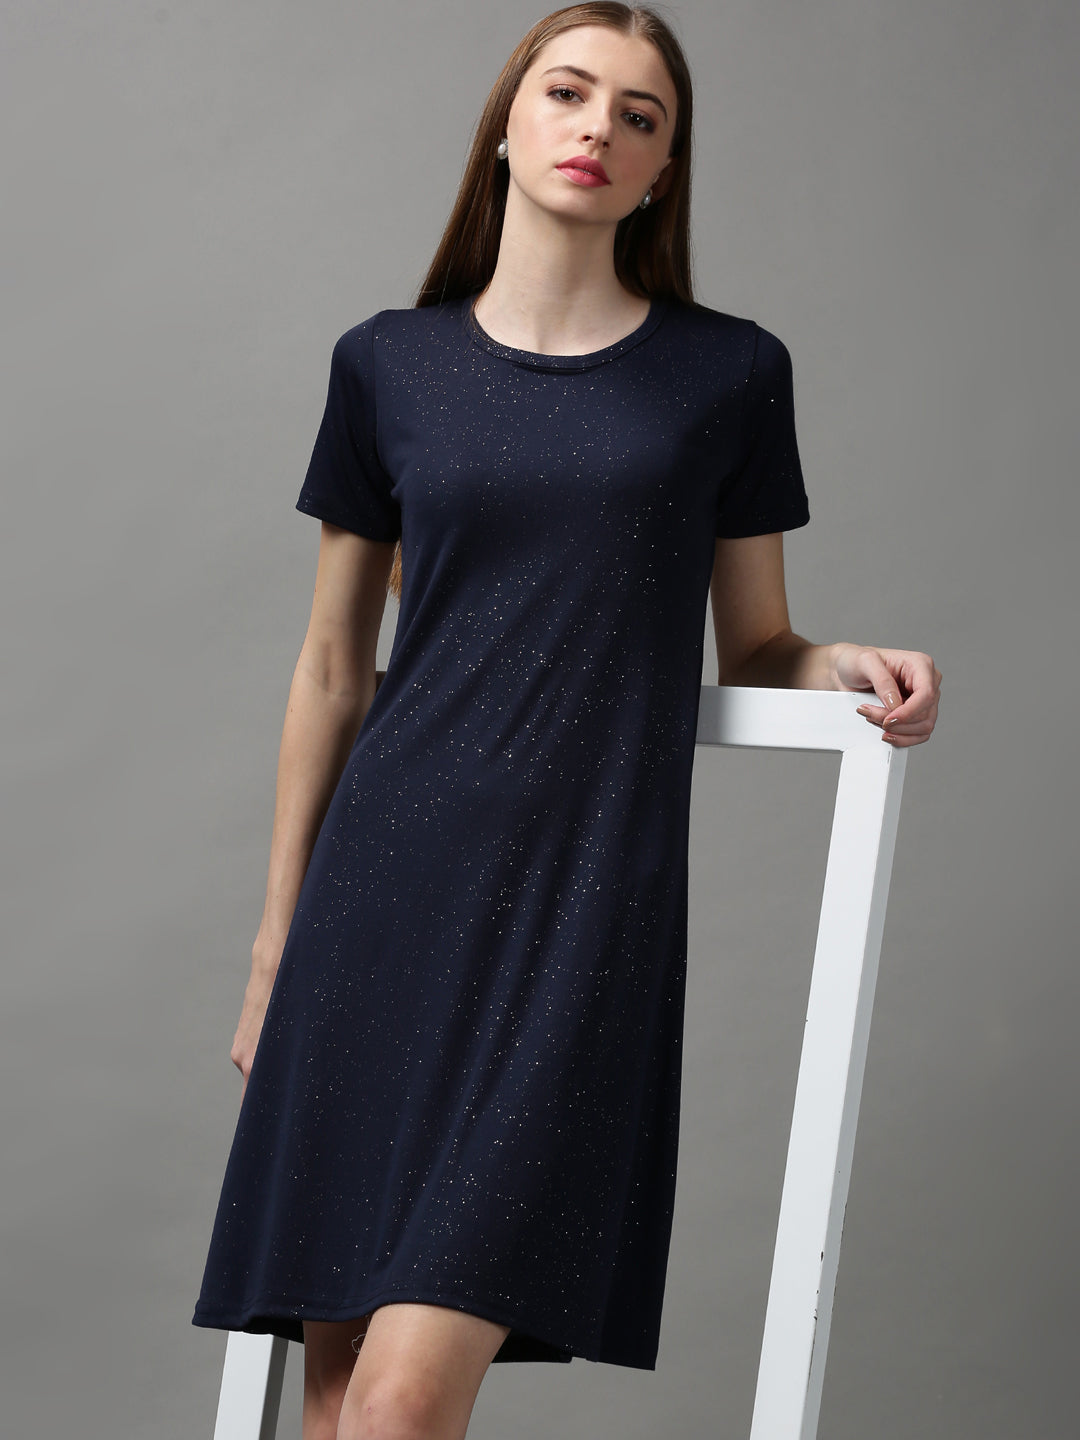 Women's Blue Embellished A-Line Dress